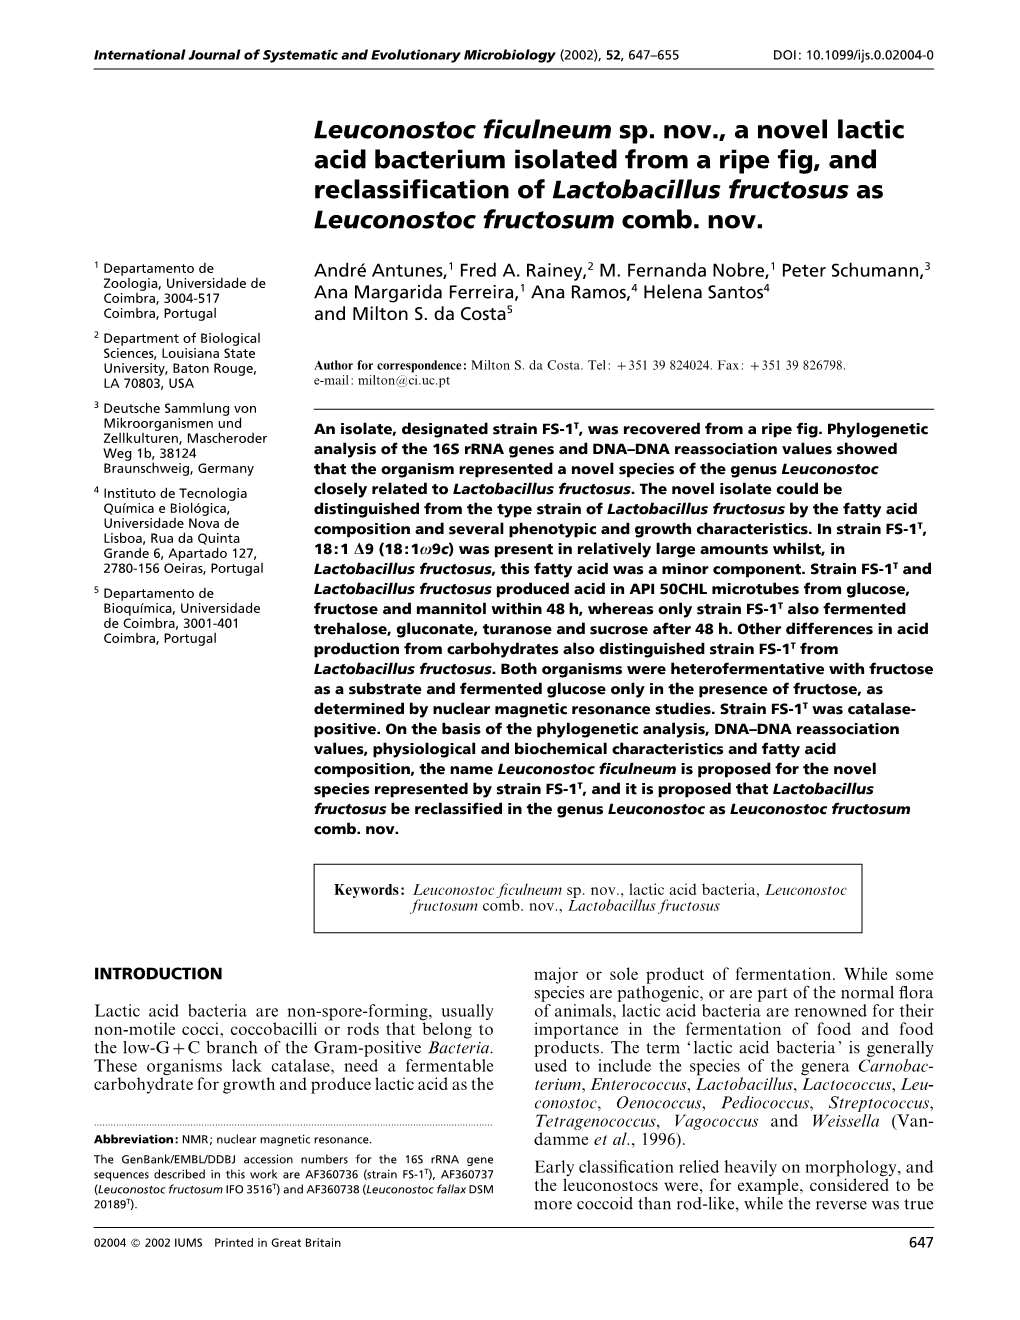 Leuconostoc Ficulneum Sp. Nov., a Novel Lactic Acid Bacterium Isolated from a Ripe ﬁg, and Reclassiﬁcation of Lactobacillus Fructosus As Leuconostoc Fructosum Comb